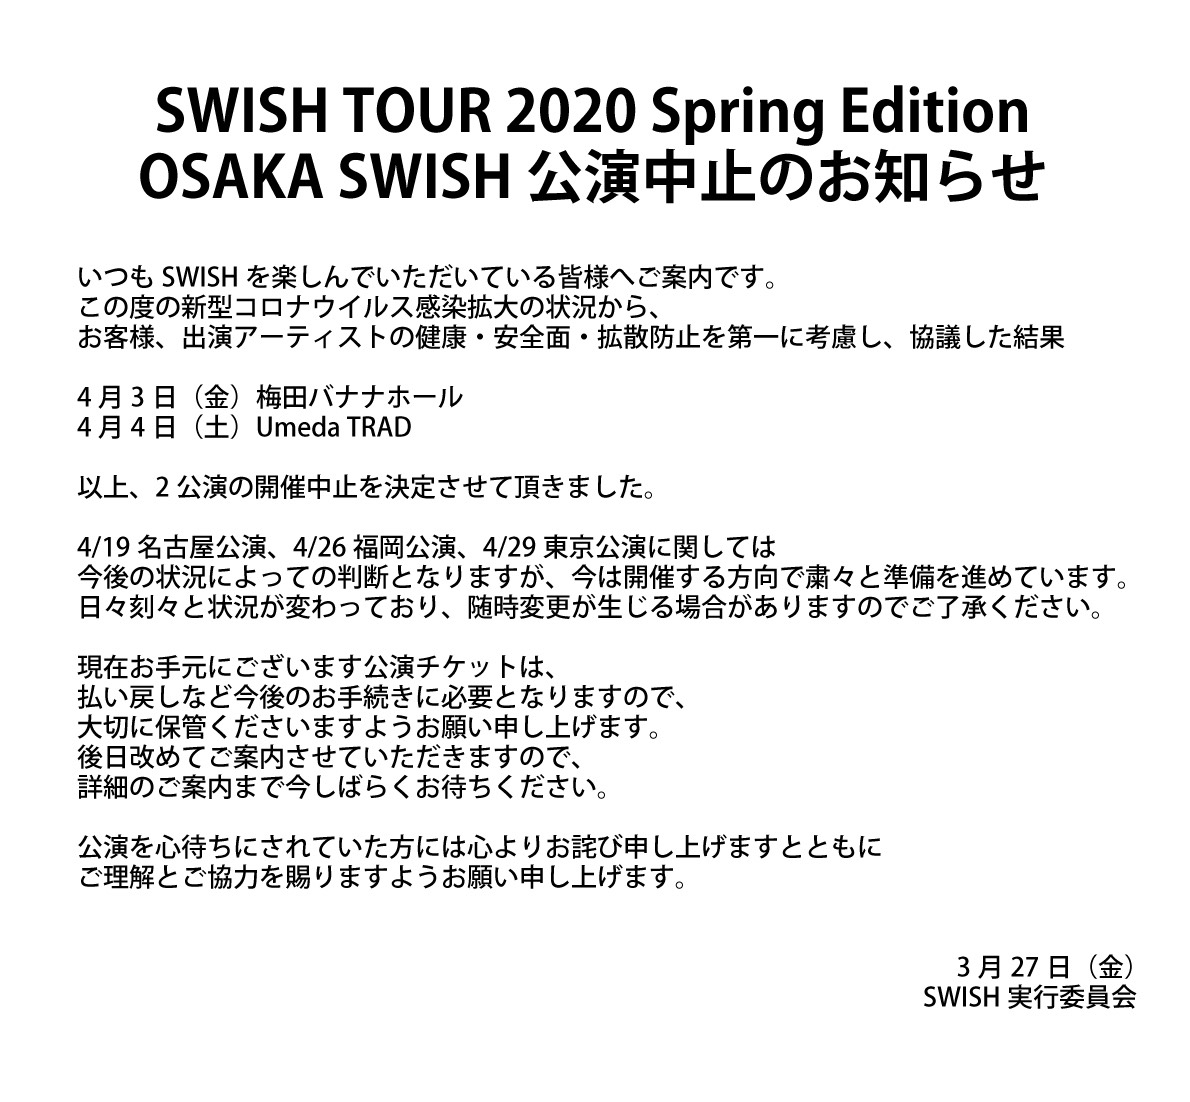 OSAKA SWISH 公演中止のお知らせ